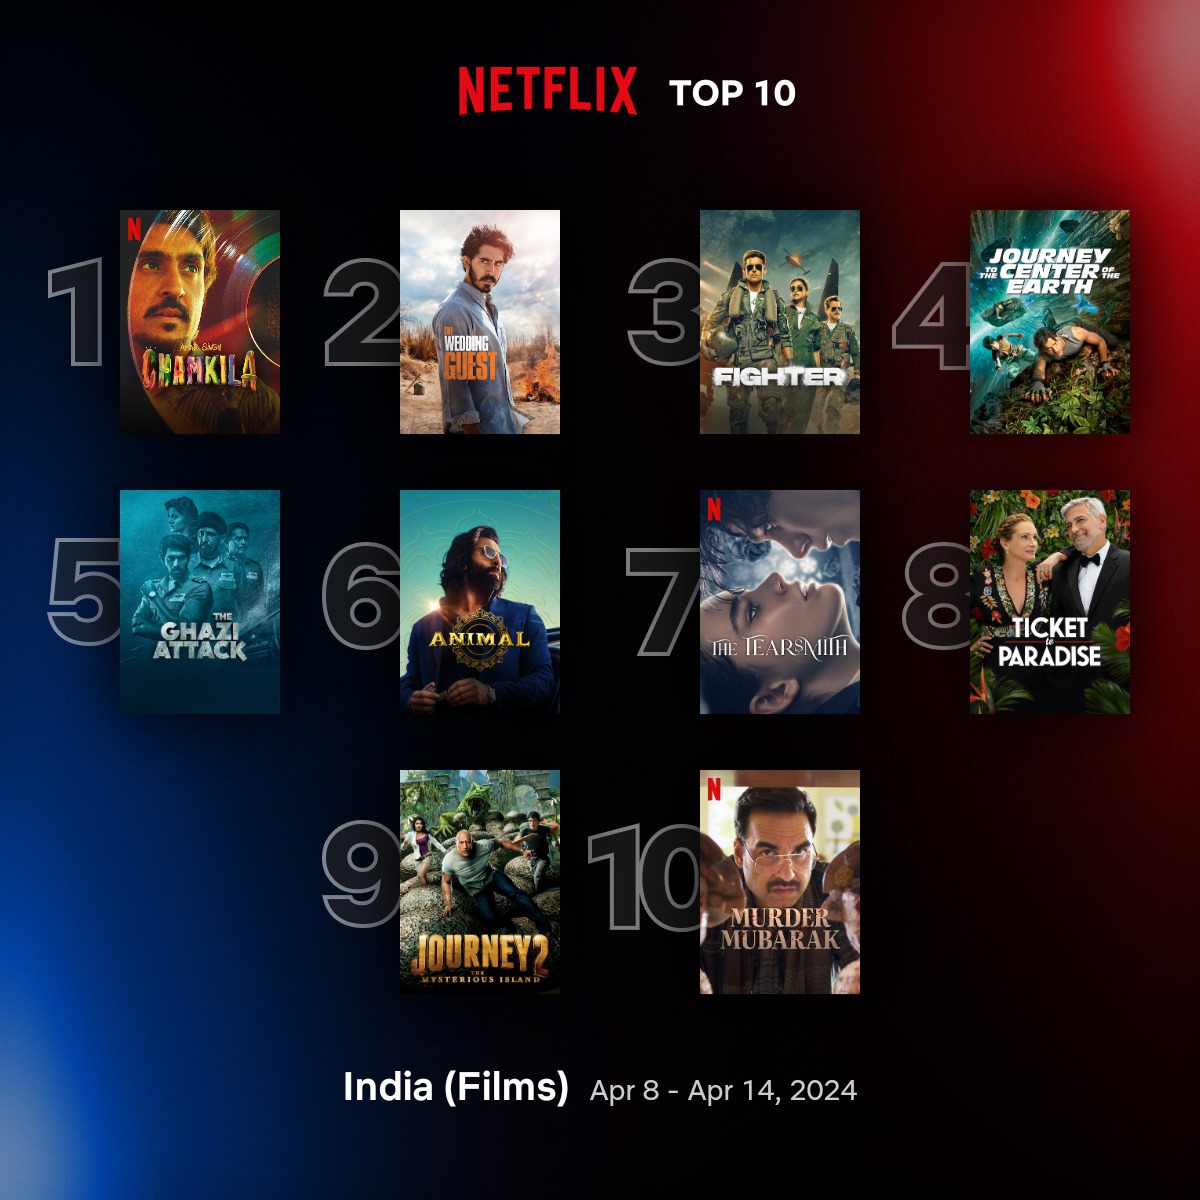 Top 10 films on #Netflix India (8-14 April)

1.#AmarSinghChamkila 
3.#Fighter
6.#Animal
10.#MurderMubarak